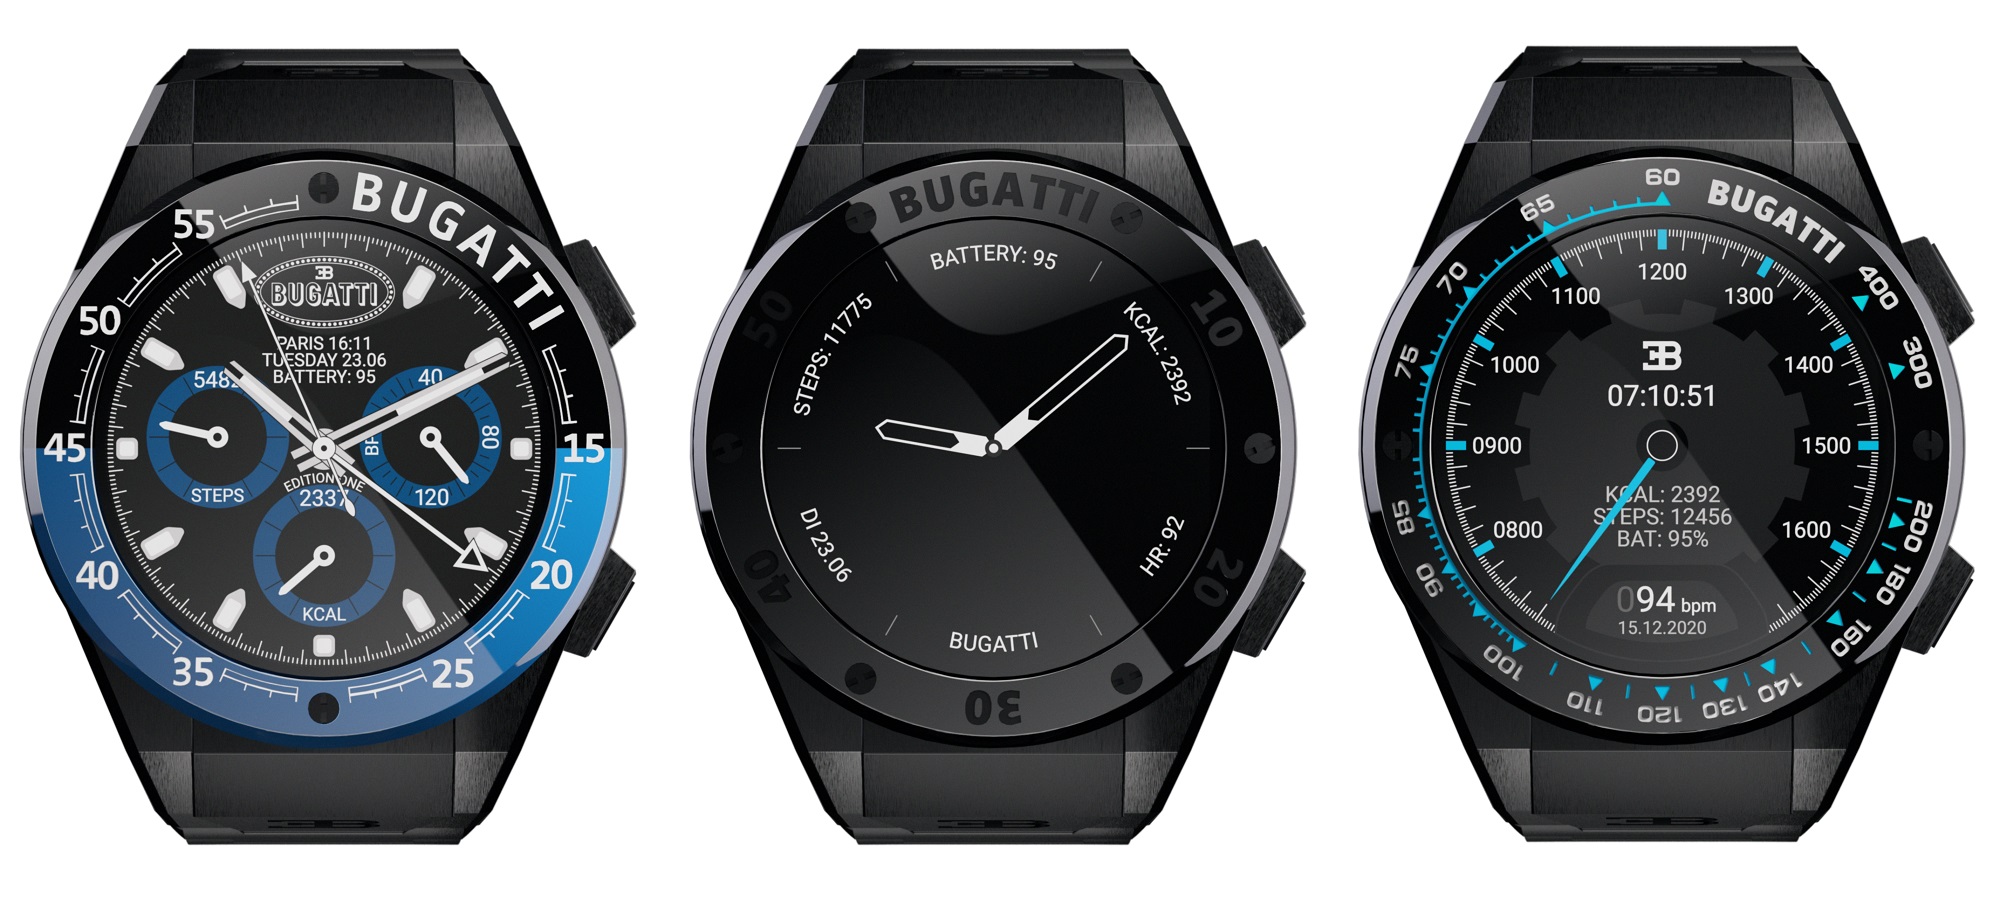 Bugatti представила три модели "умных" часов